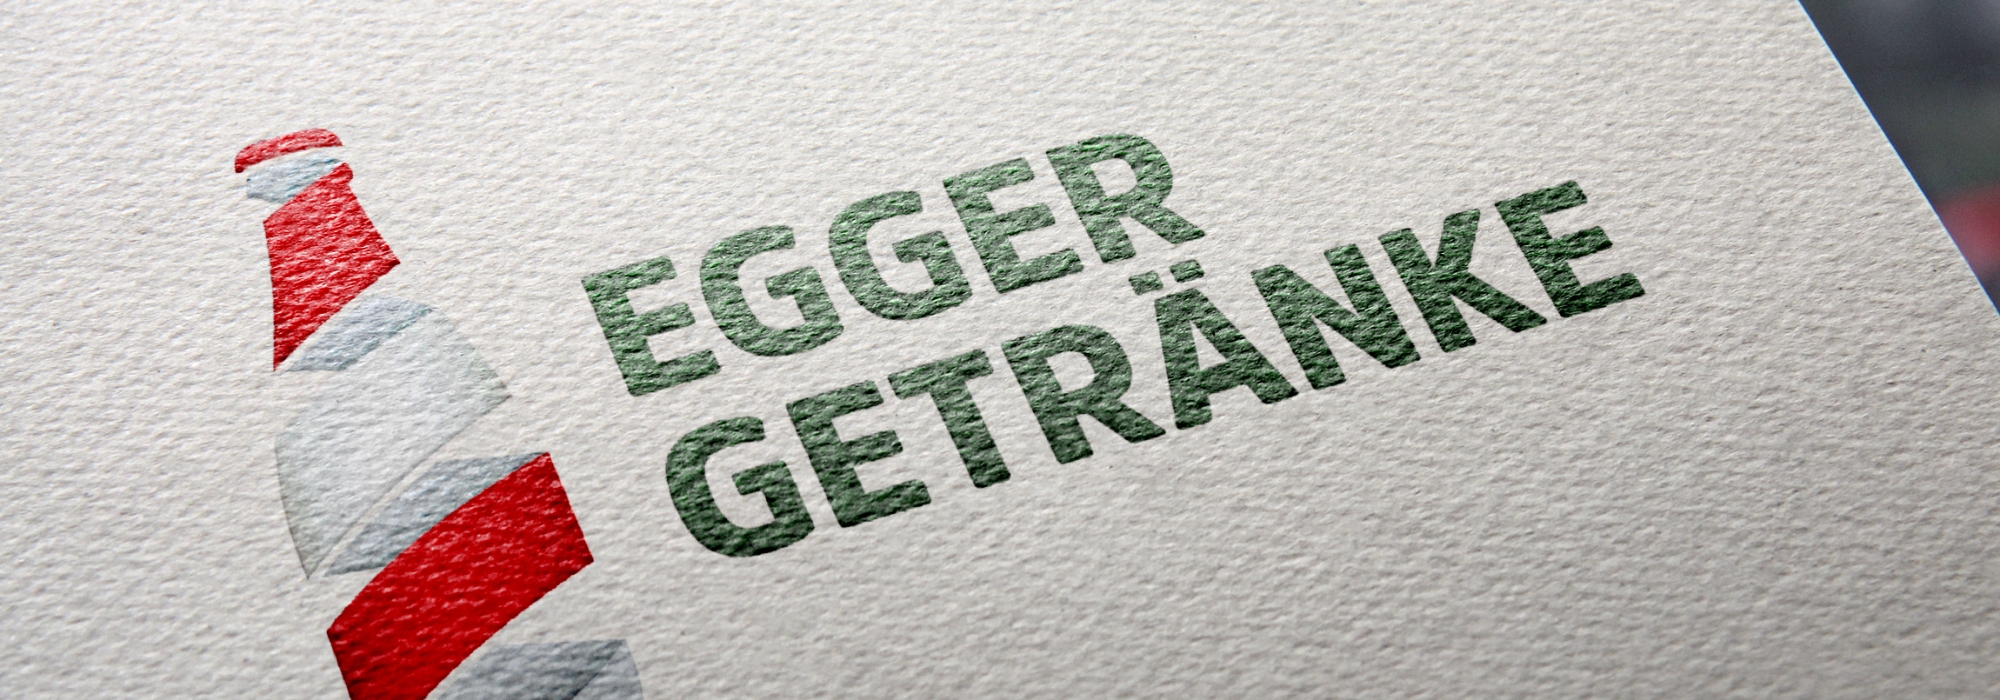 Egger Getränke - Corporate Design